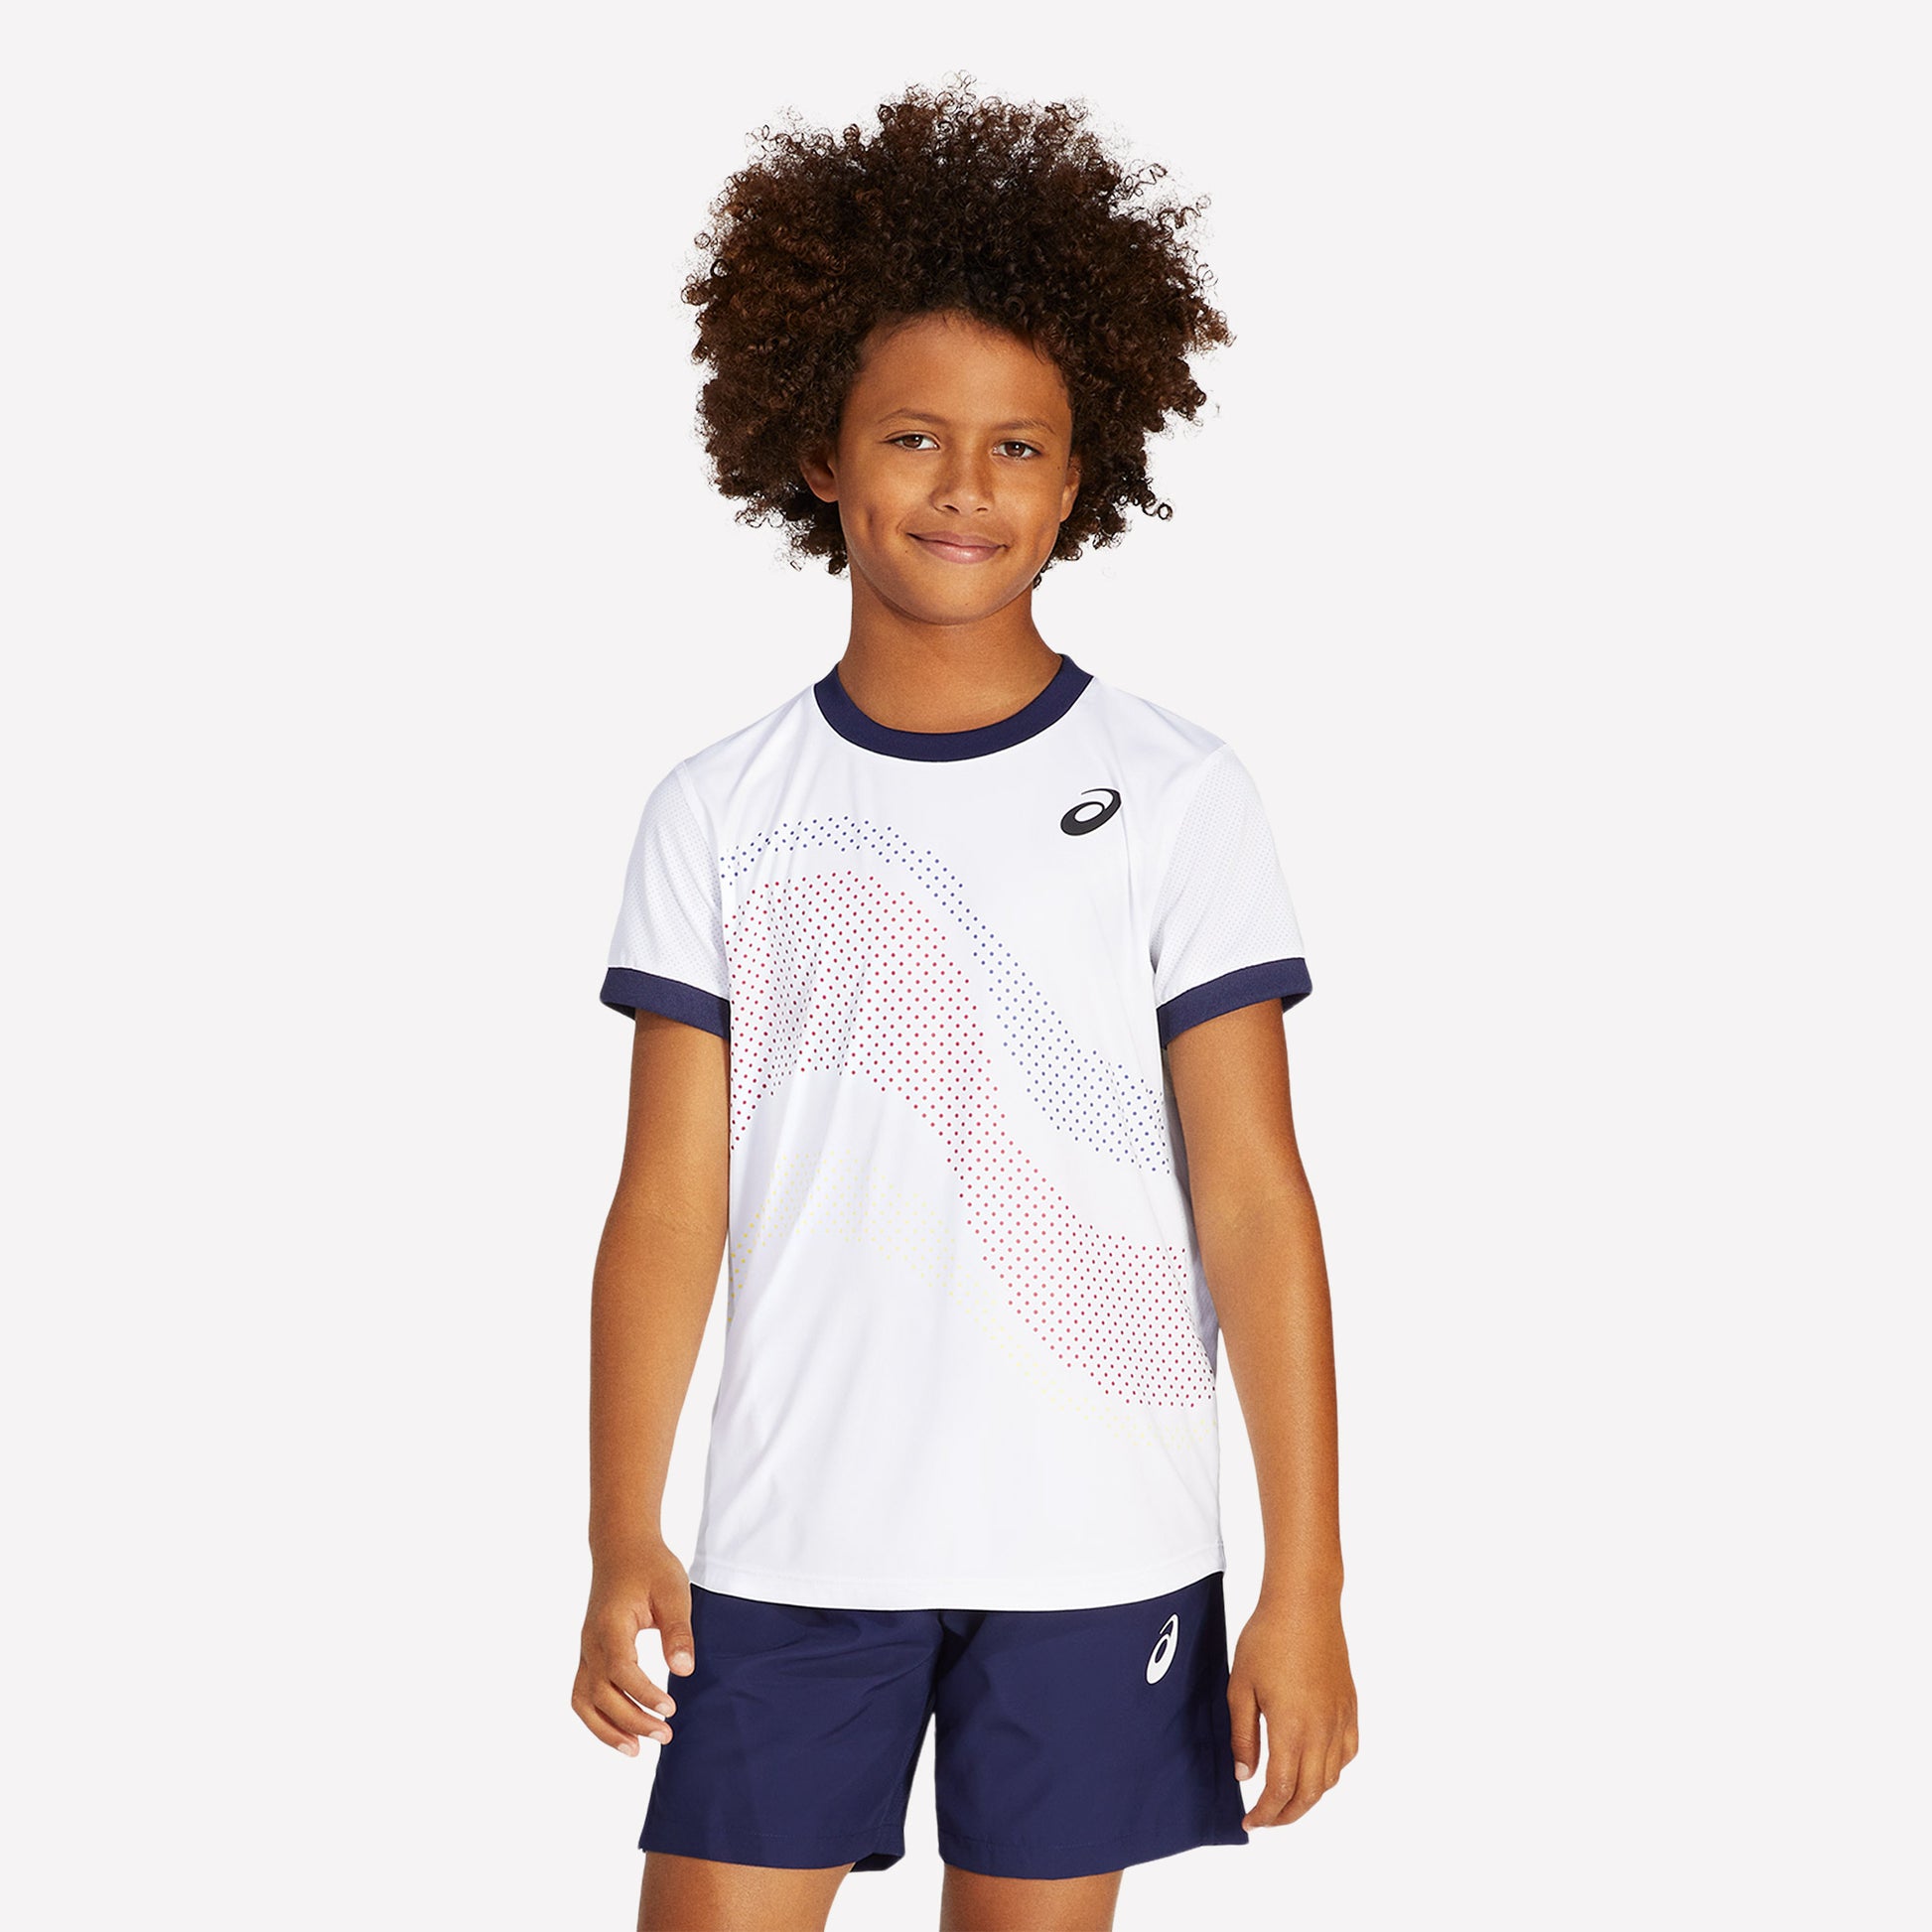 ASICS Match Boys' Graphic Tennis Shirt White (1)